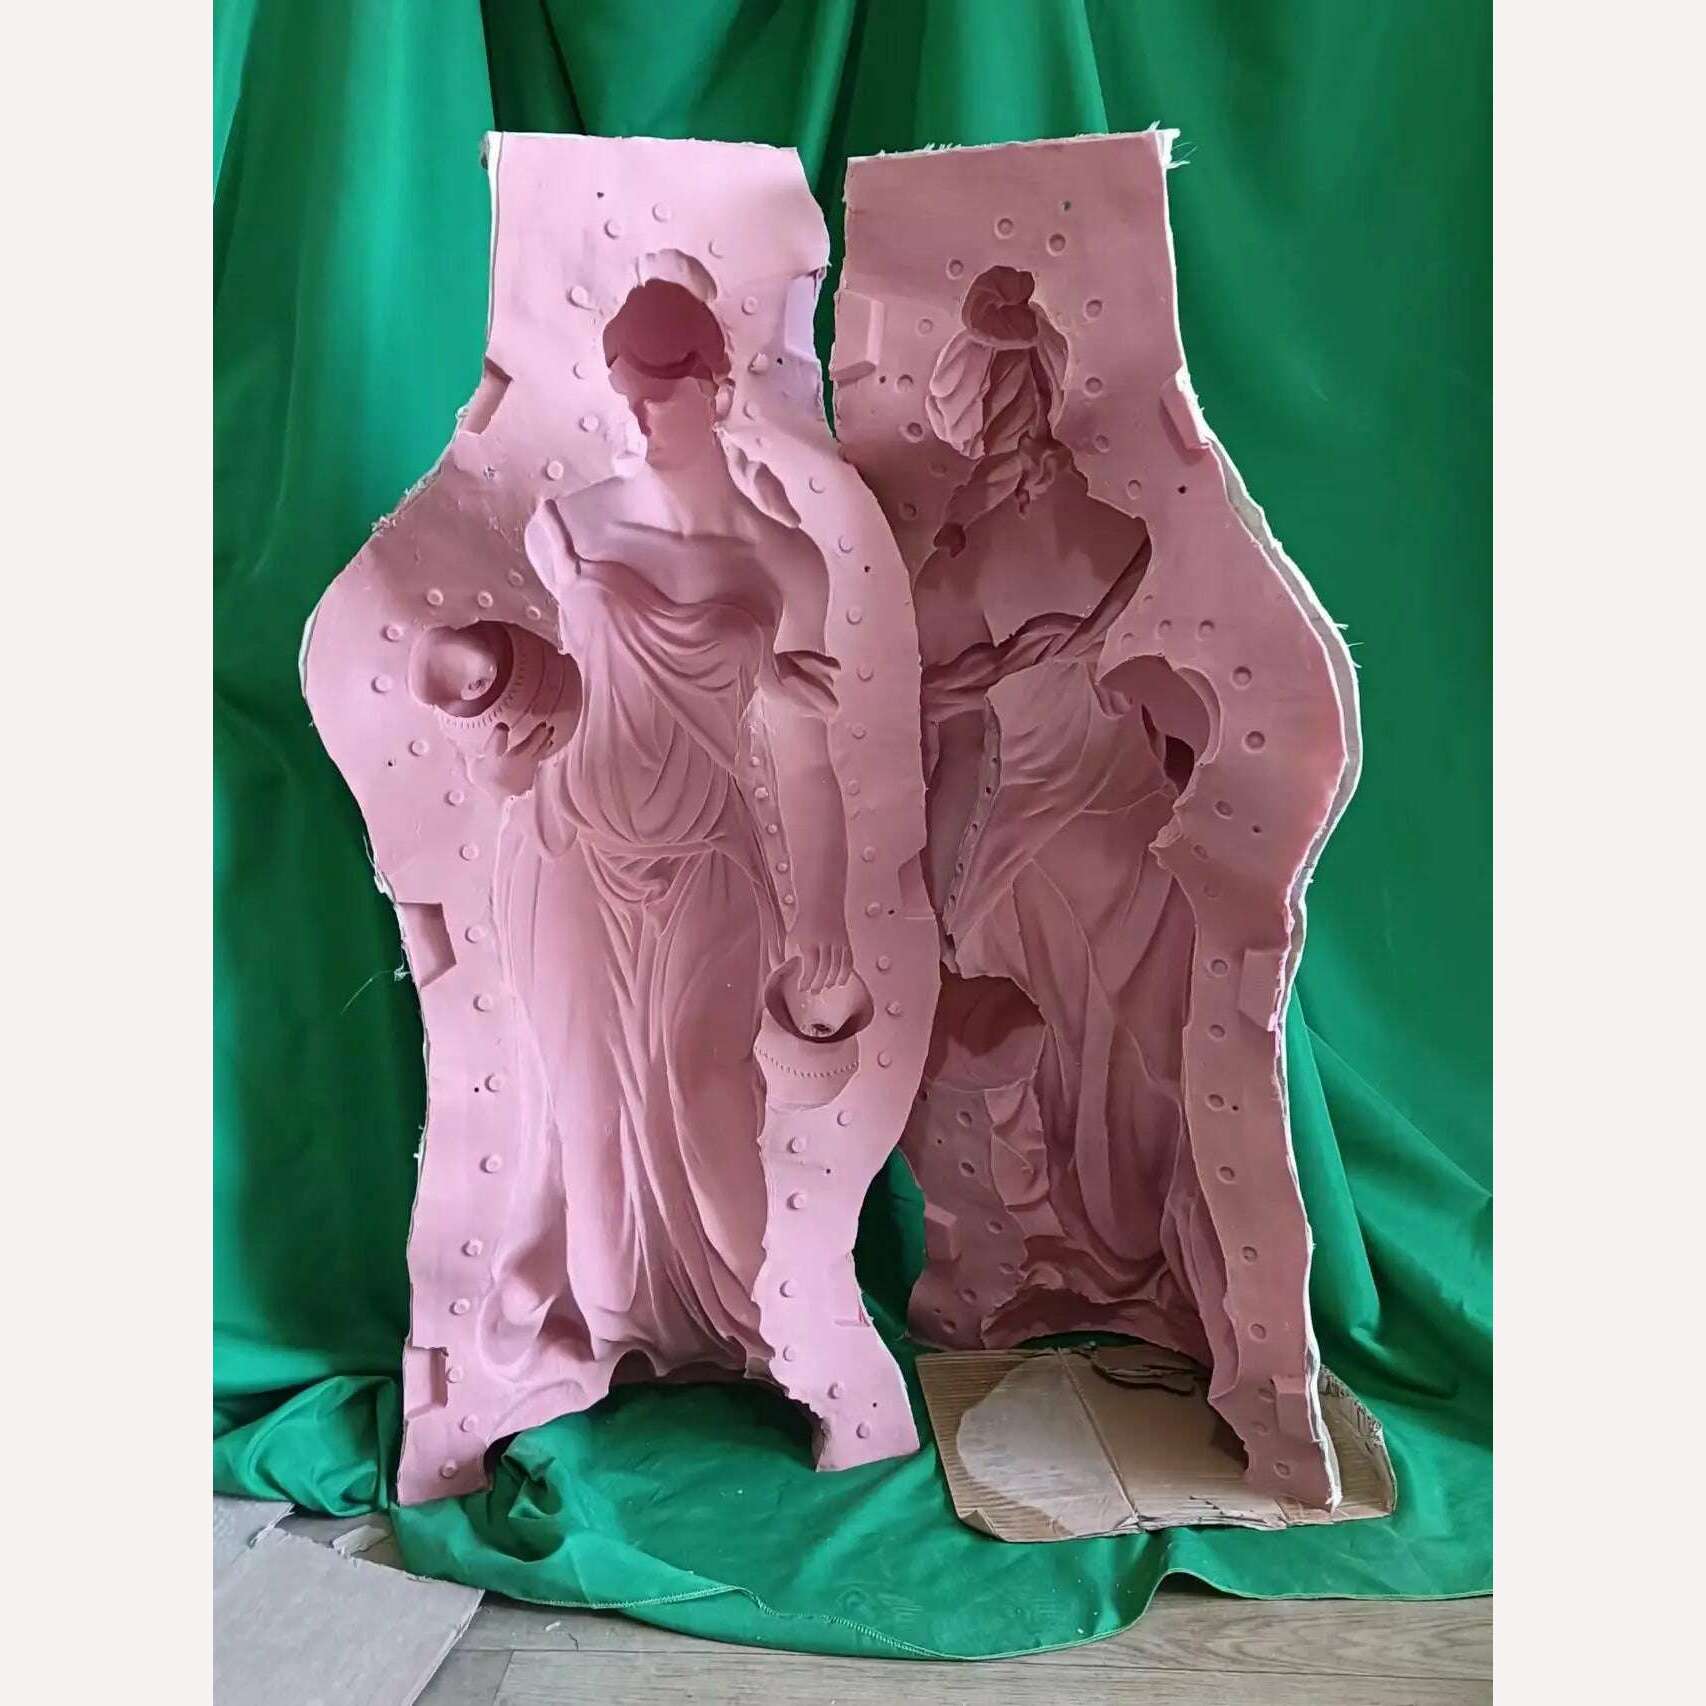 KIMLUD, Reazone Maid Sculpture Moule, KIMLUD Womens Clothes